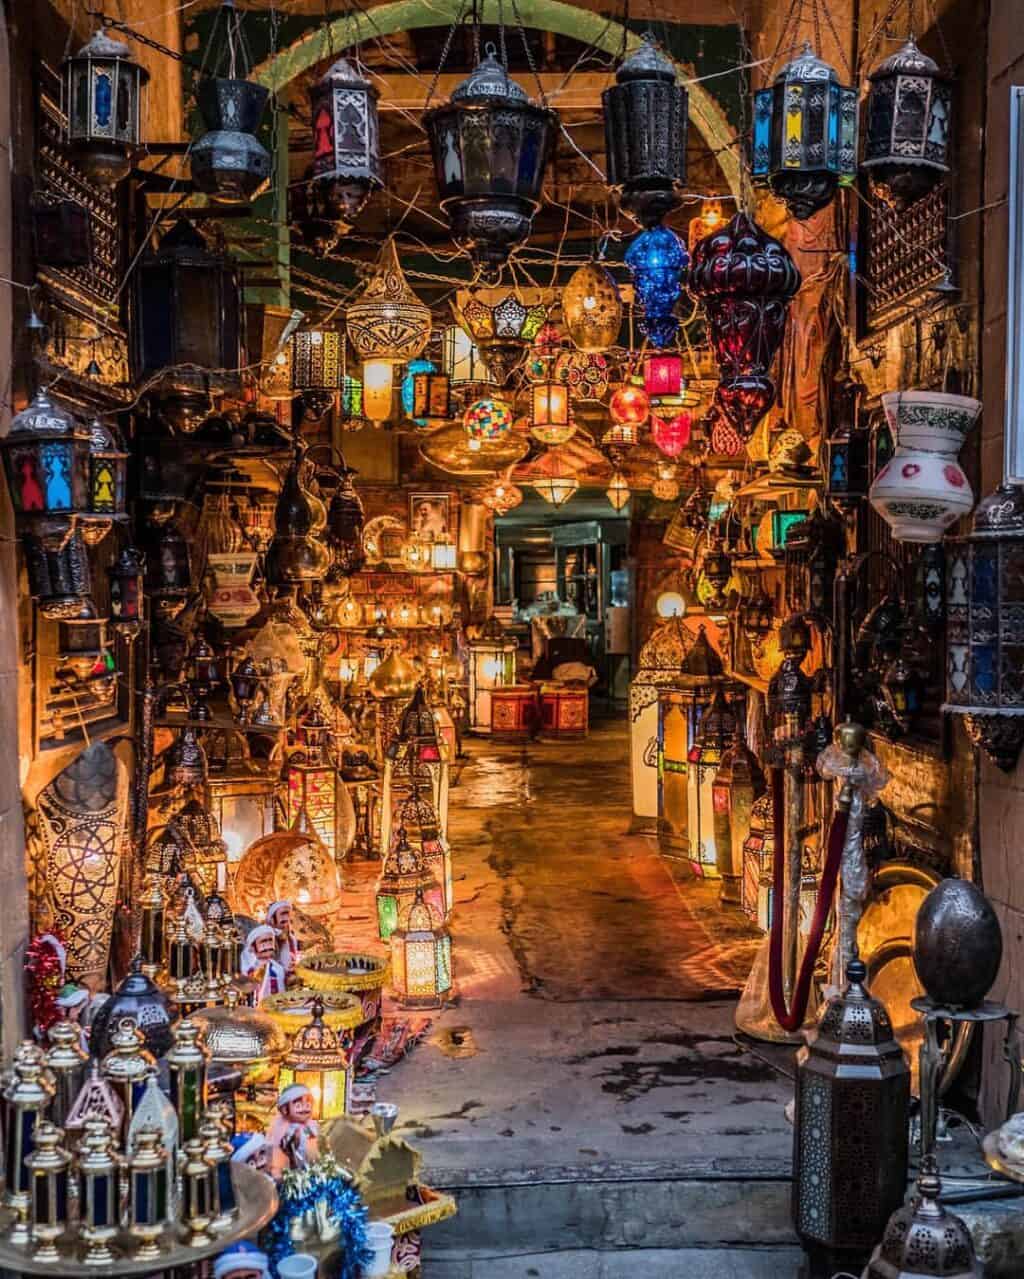 Adventurous Shopping in Khan el Khalili, Egypt’s Oldest Bazaar